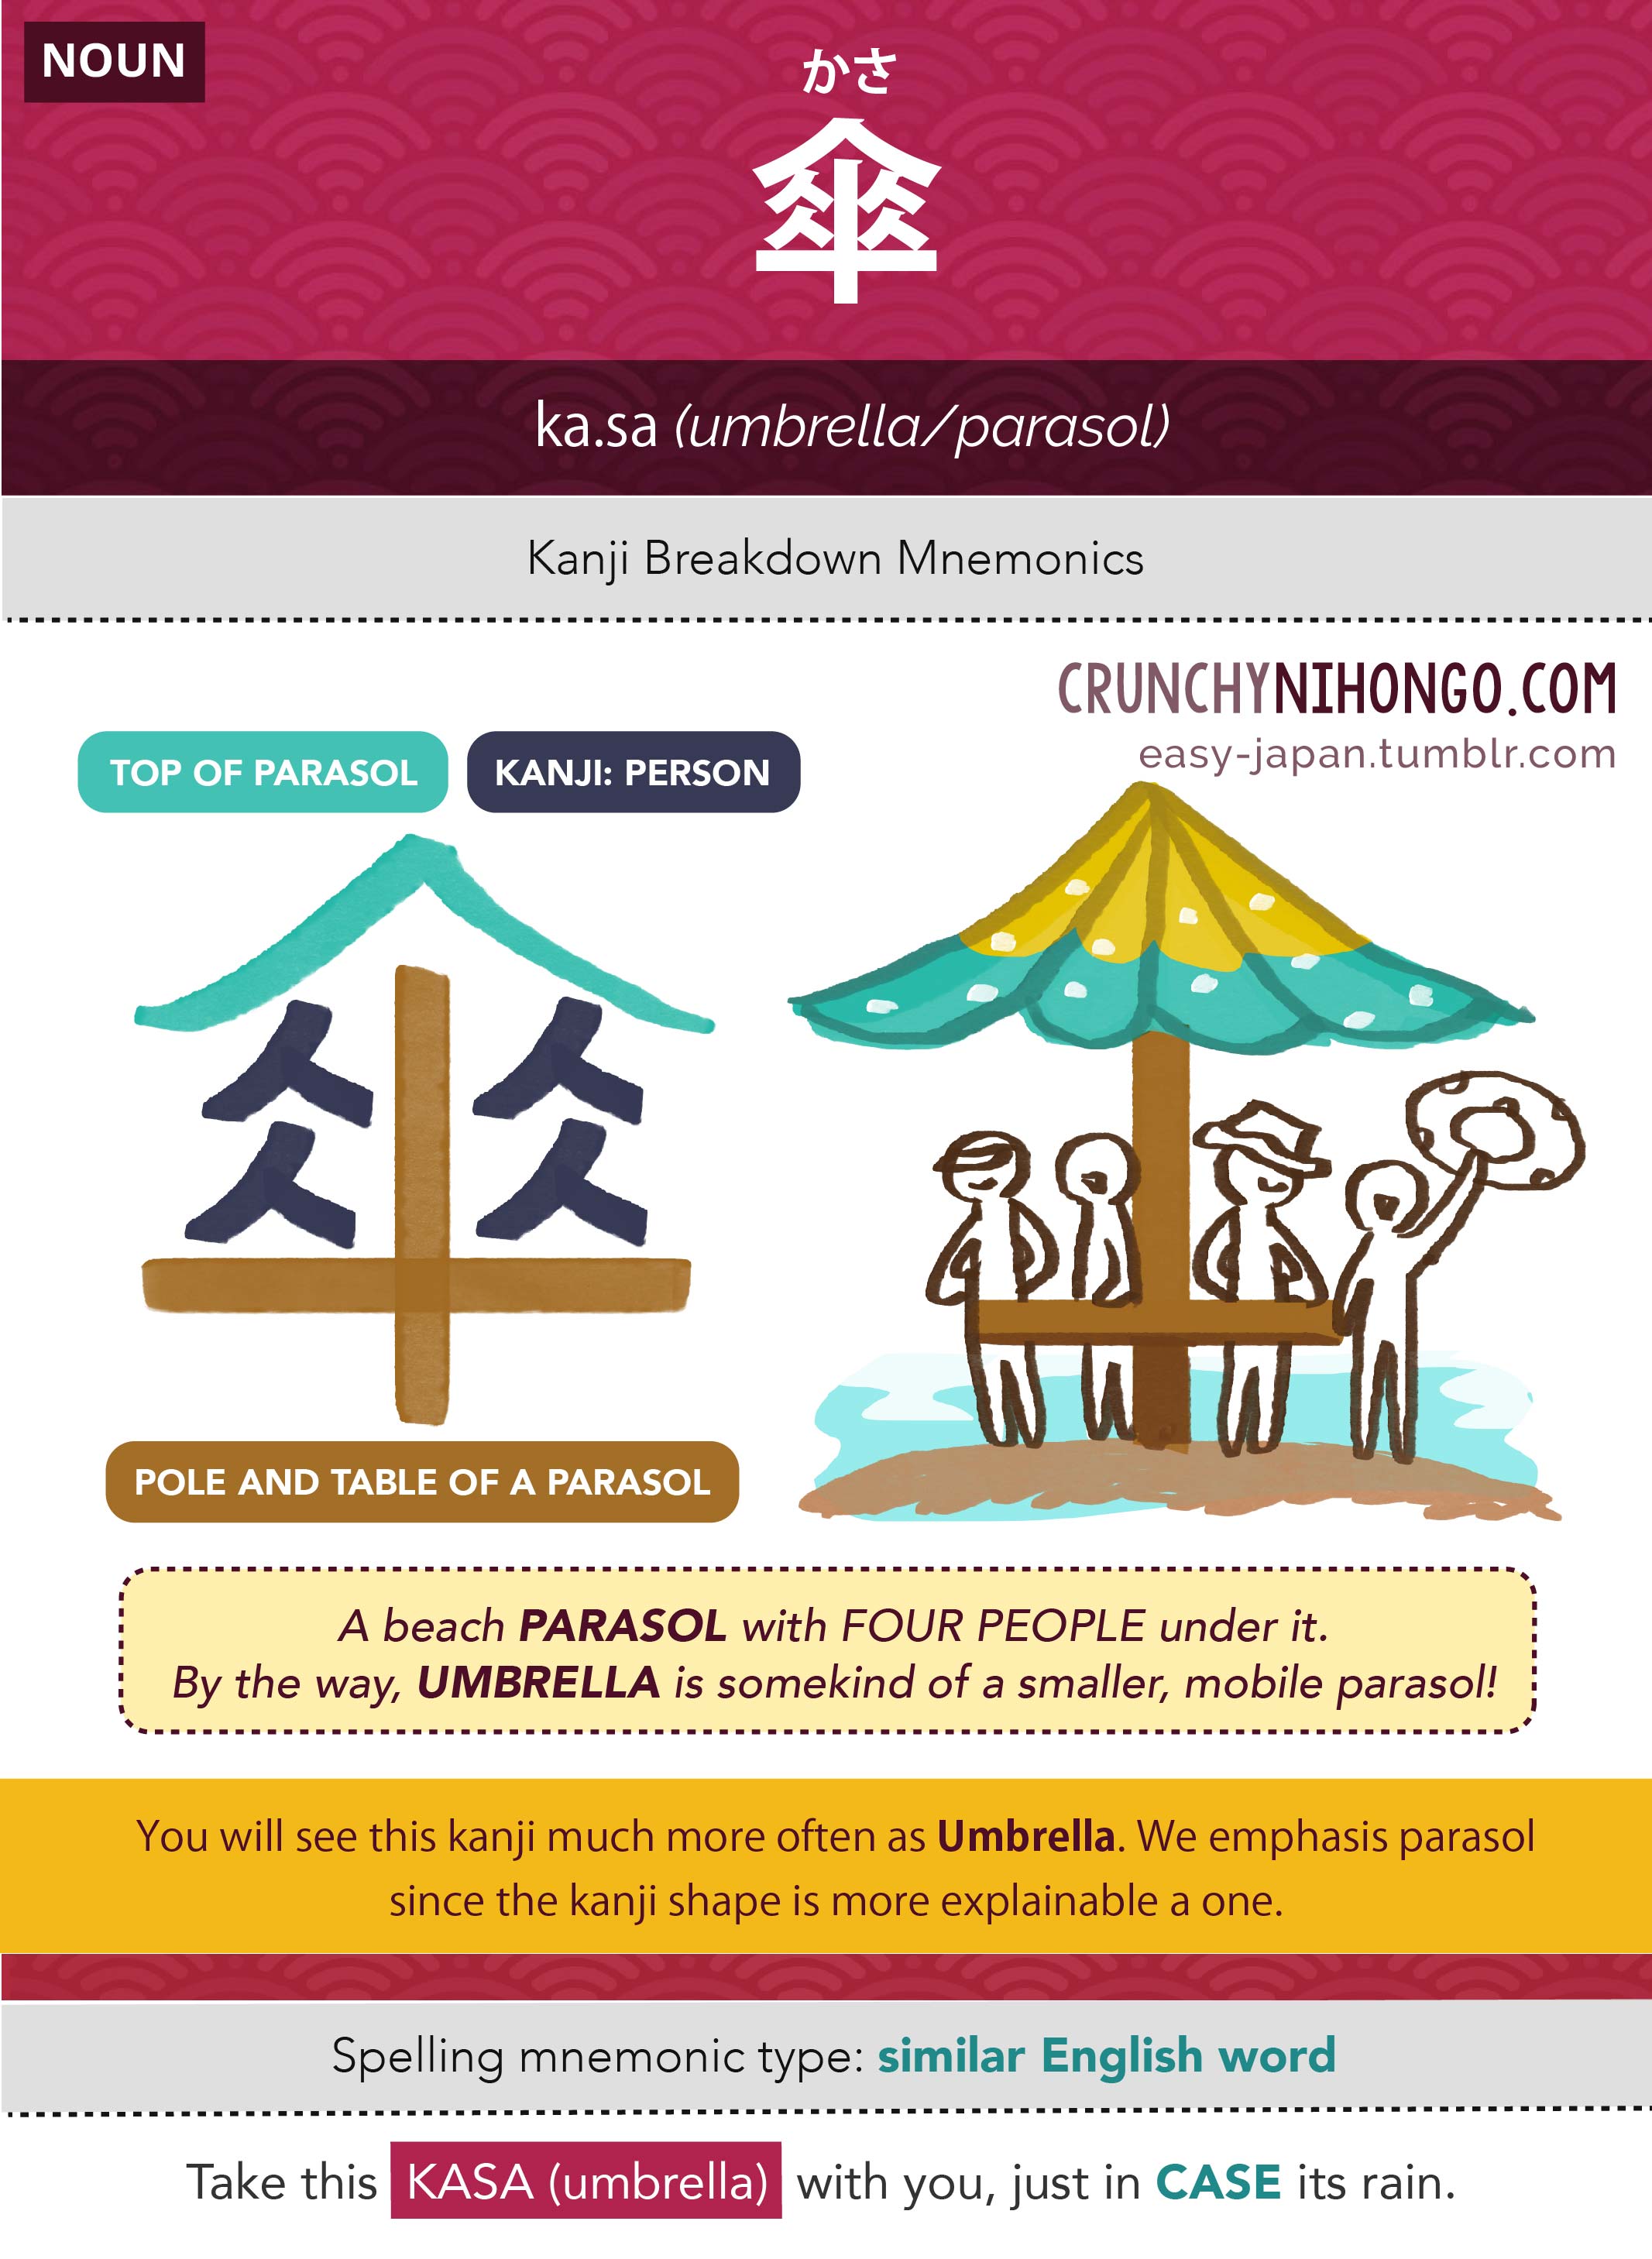 n5-vocabulary-kasa-umbrella